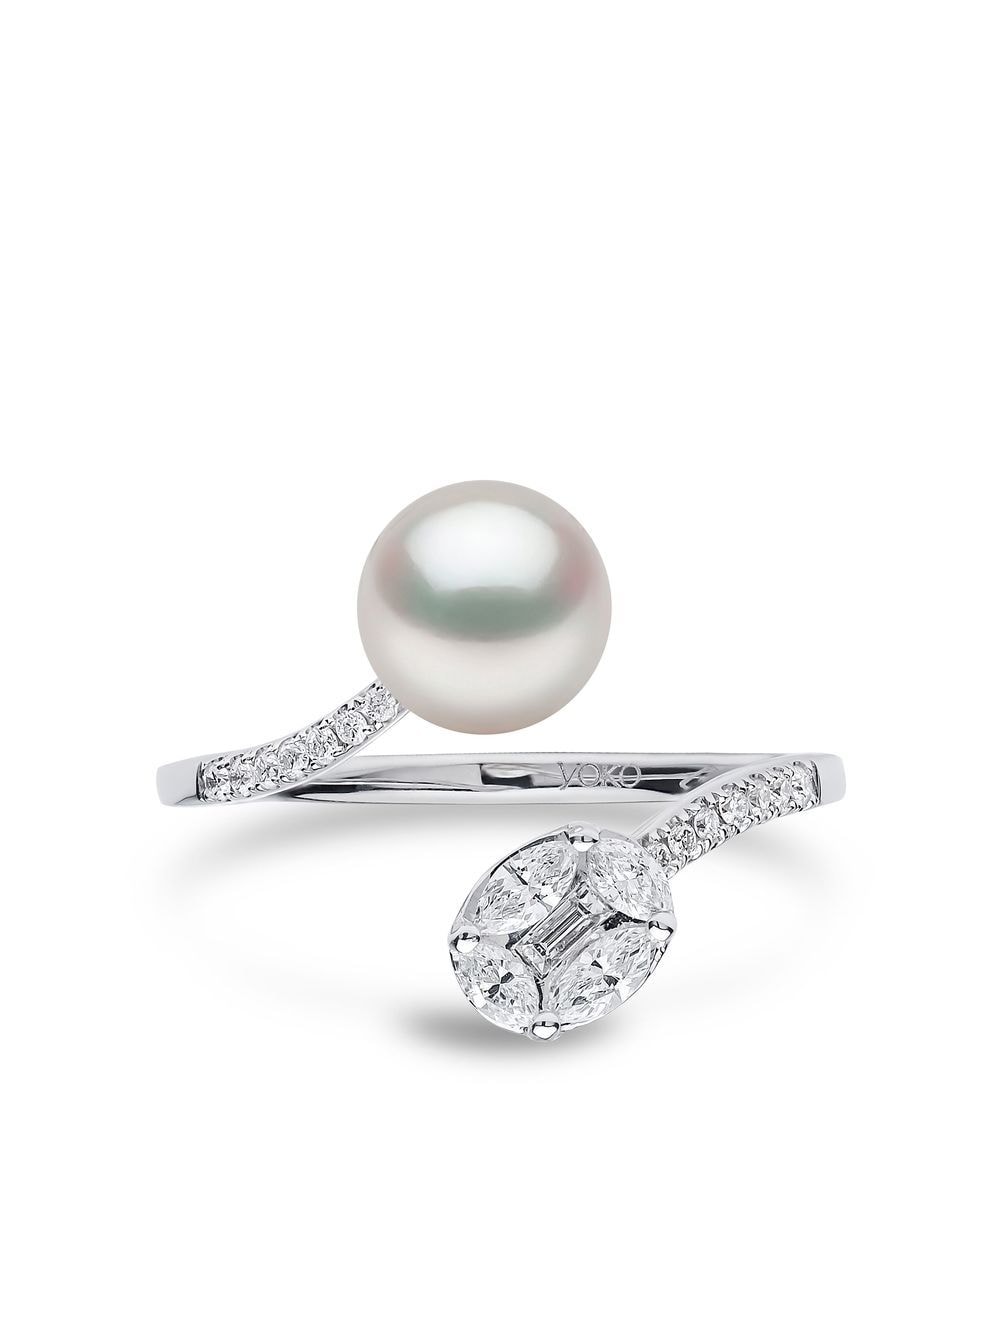 Yoko London 18kt white gold Starlight pearl and diamond ring - Silver von Yoko London